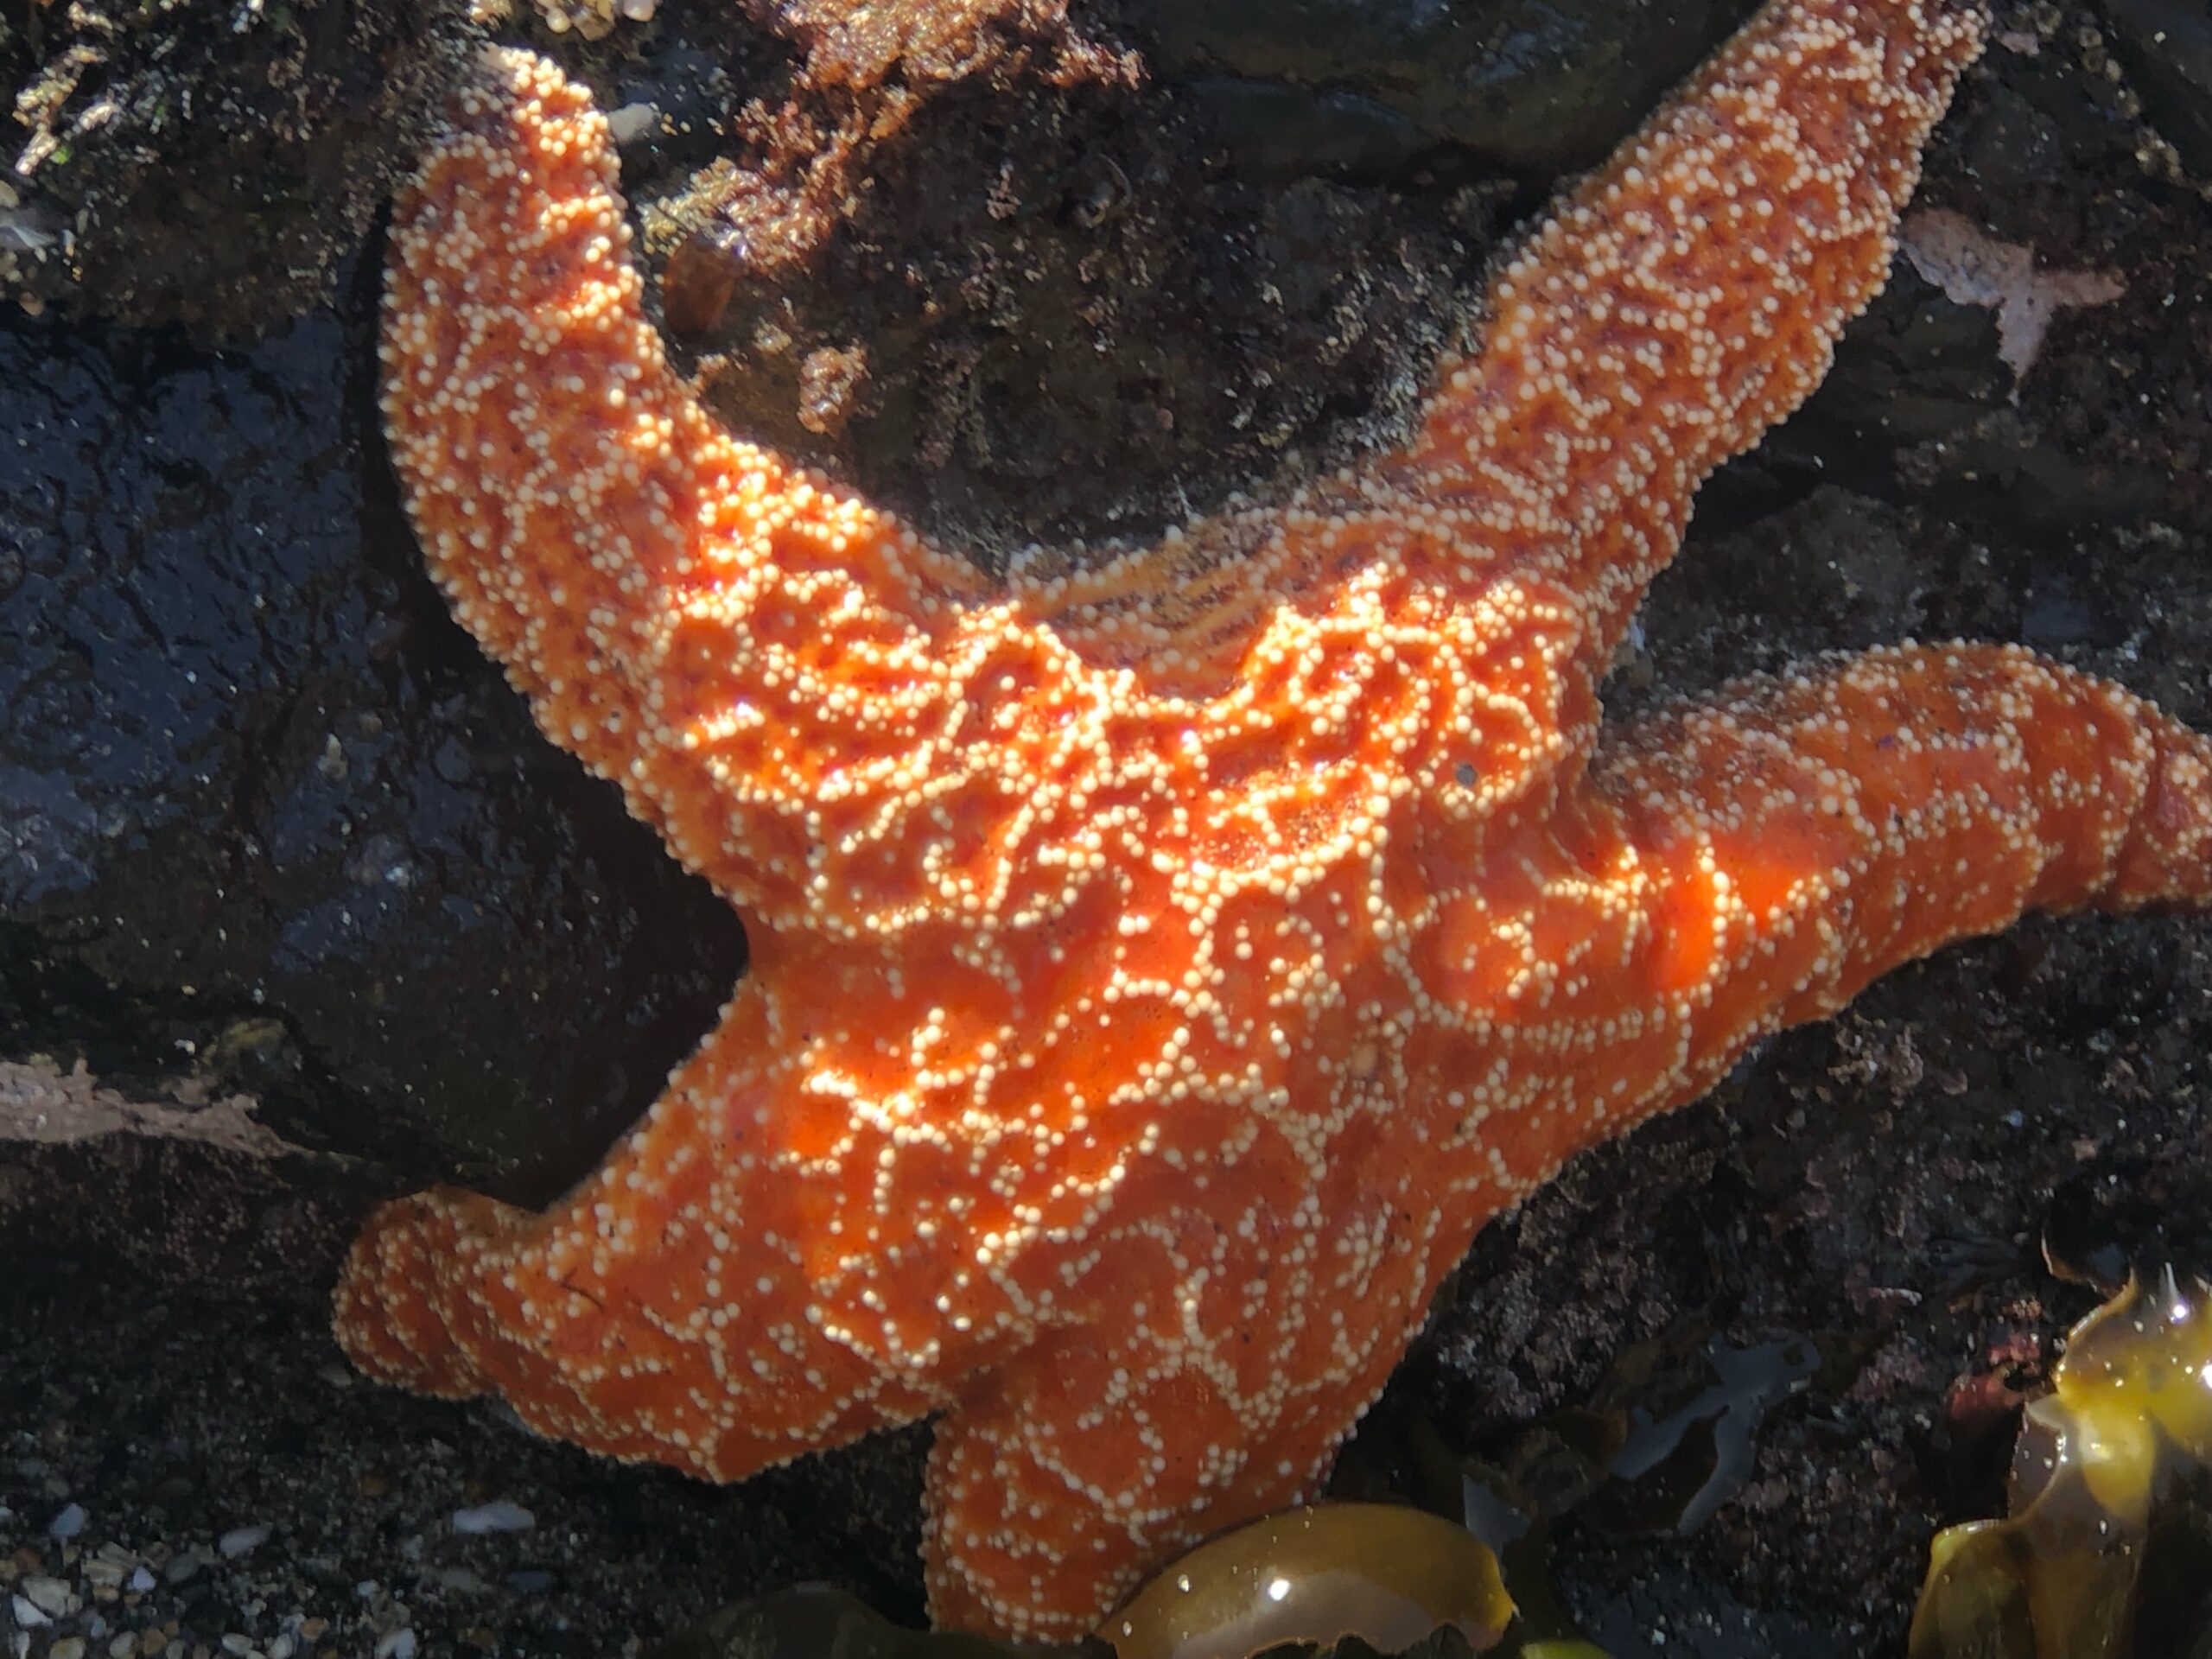 Stranded starfish at Rhossili Bay – Jessica's Nature Blog